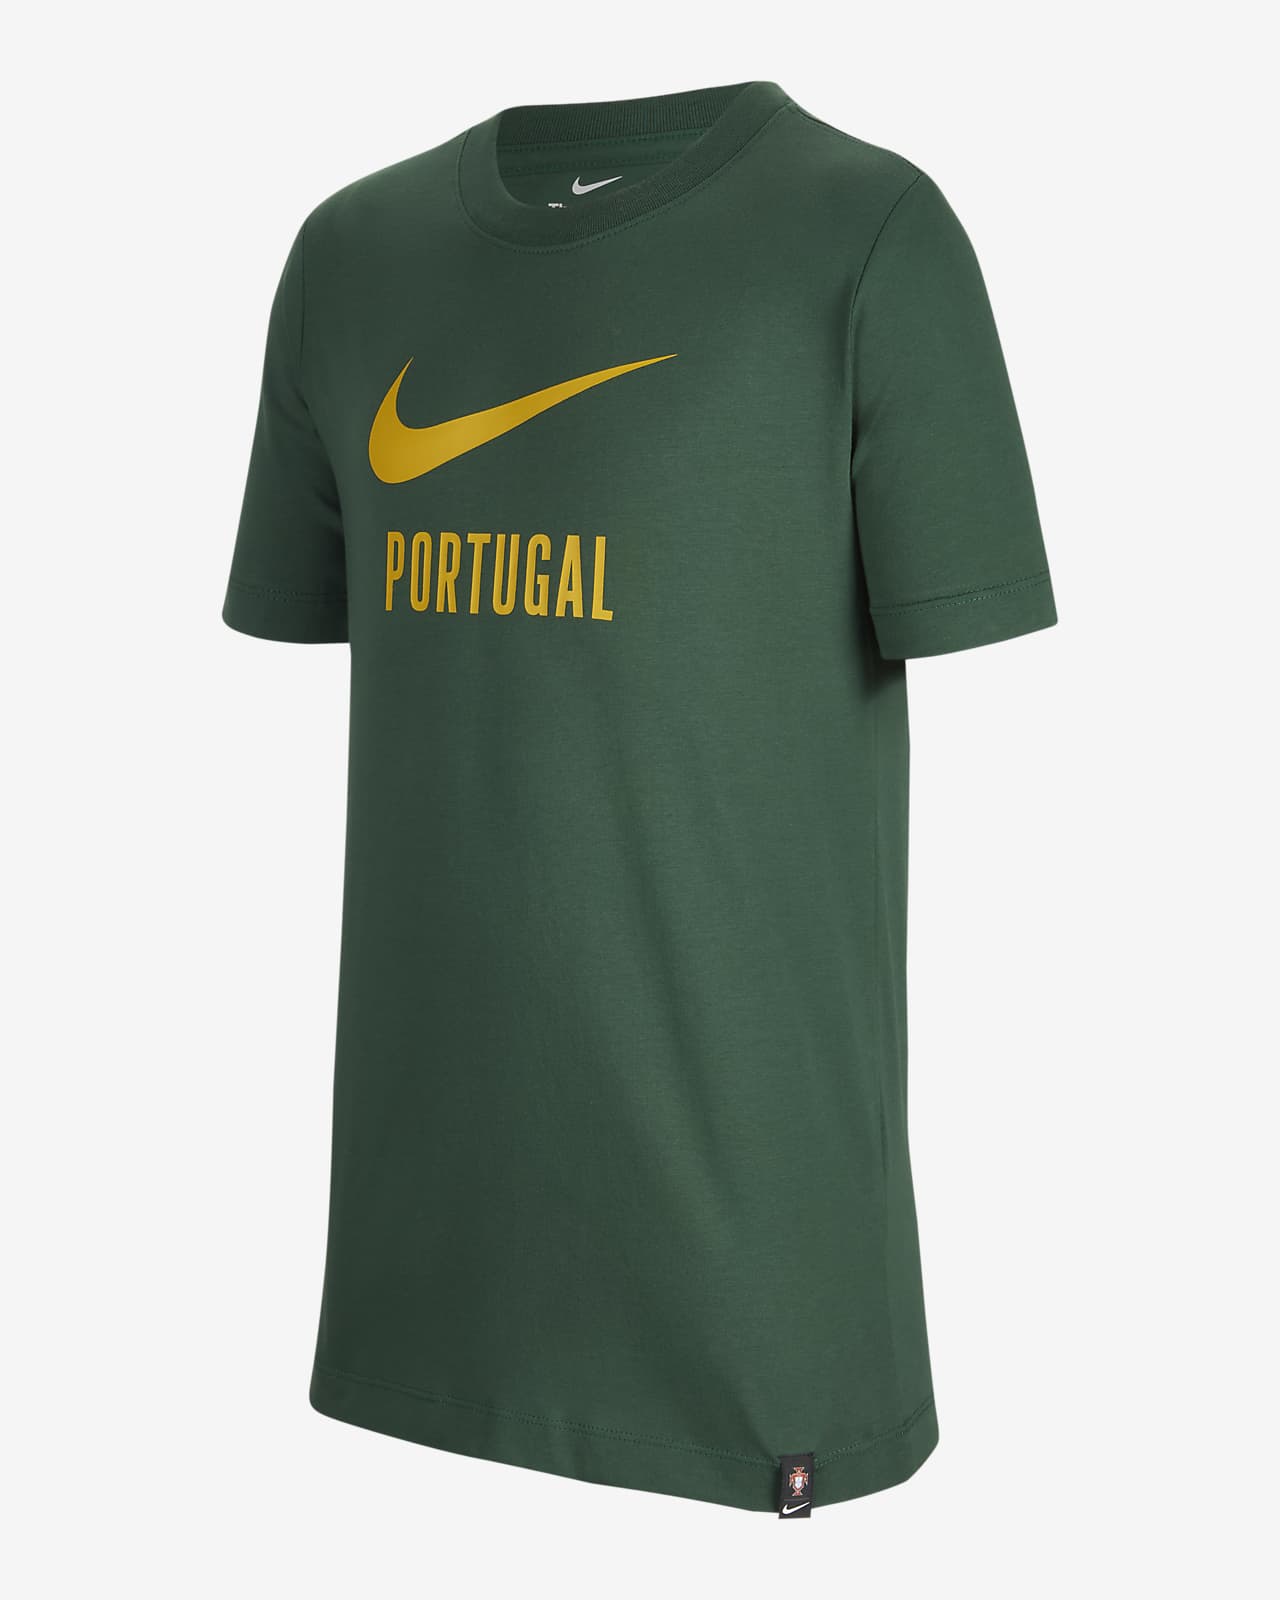 Northwest mischief island Portugal Swoosh Older Kids' Nike T-Shirt. Nike ID